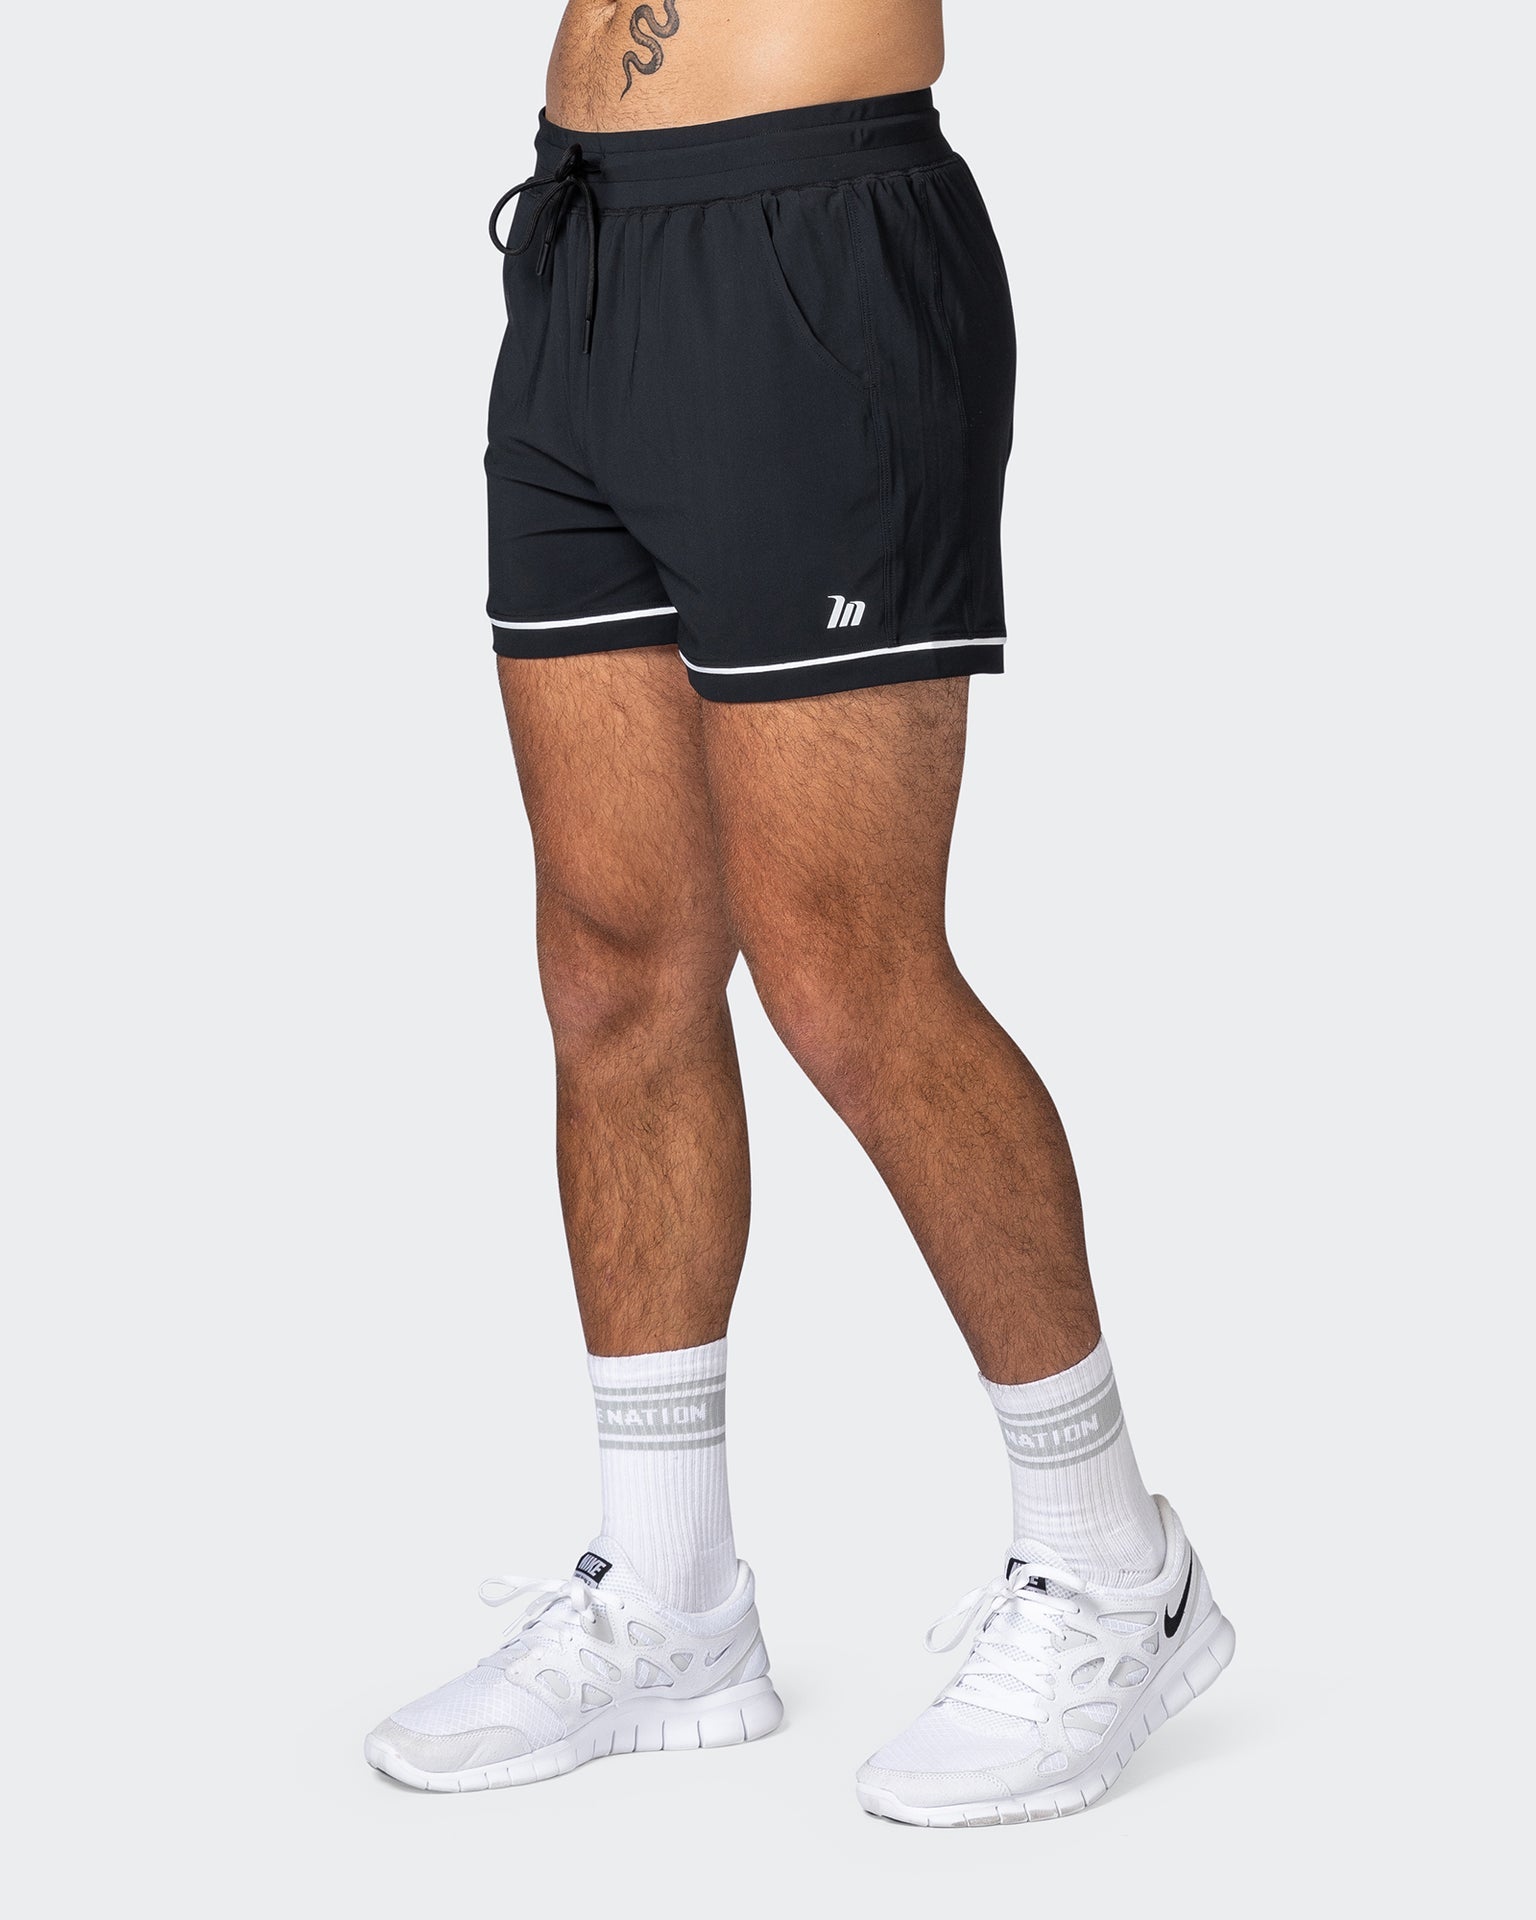 musclenation Shorts Squat Shorts - Black / White